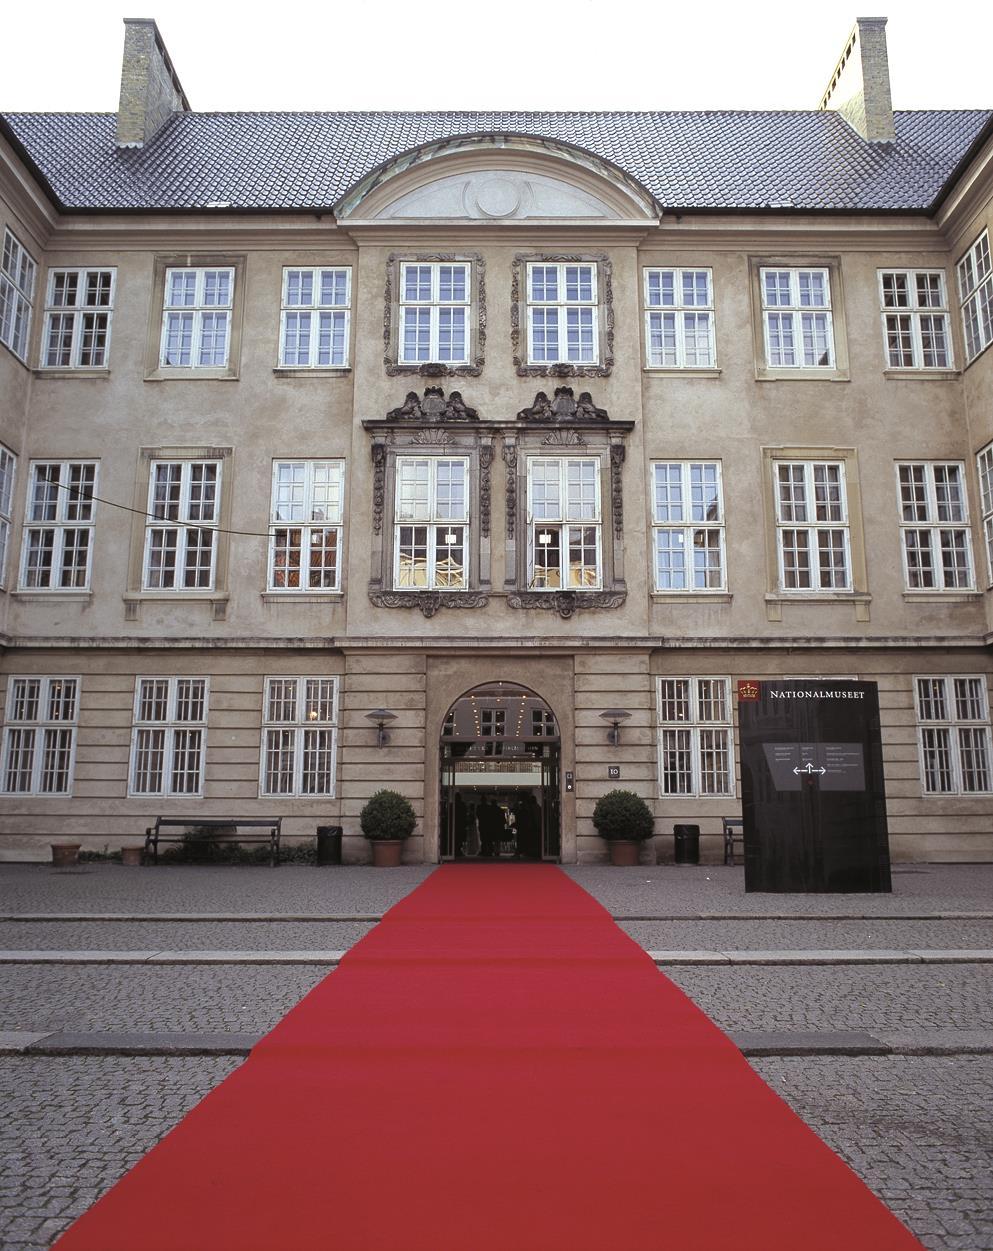 EXPLORE COPENHAGEN FREE ENTRANCE TO THE NATIONAL MUSEUM OF DENMARK Denmark's National Museum in Copenhagen has exhibitions from the Stone